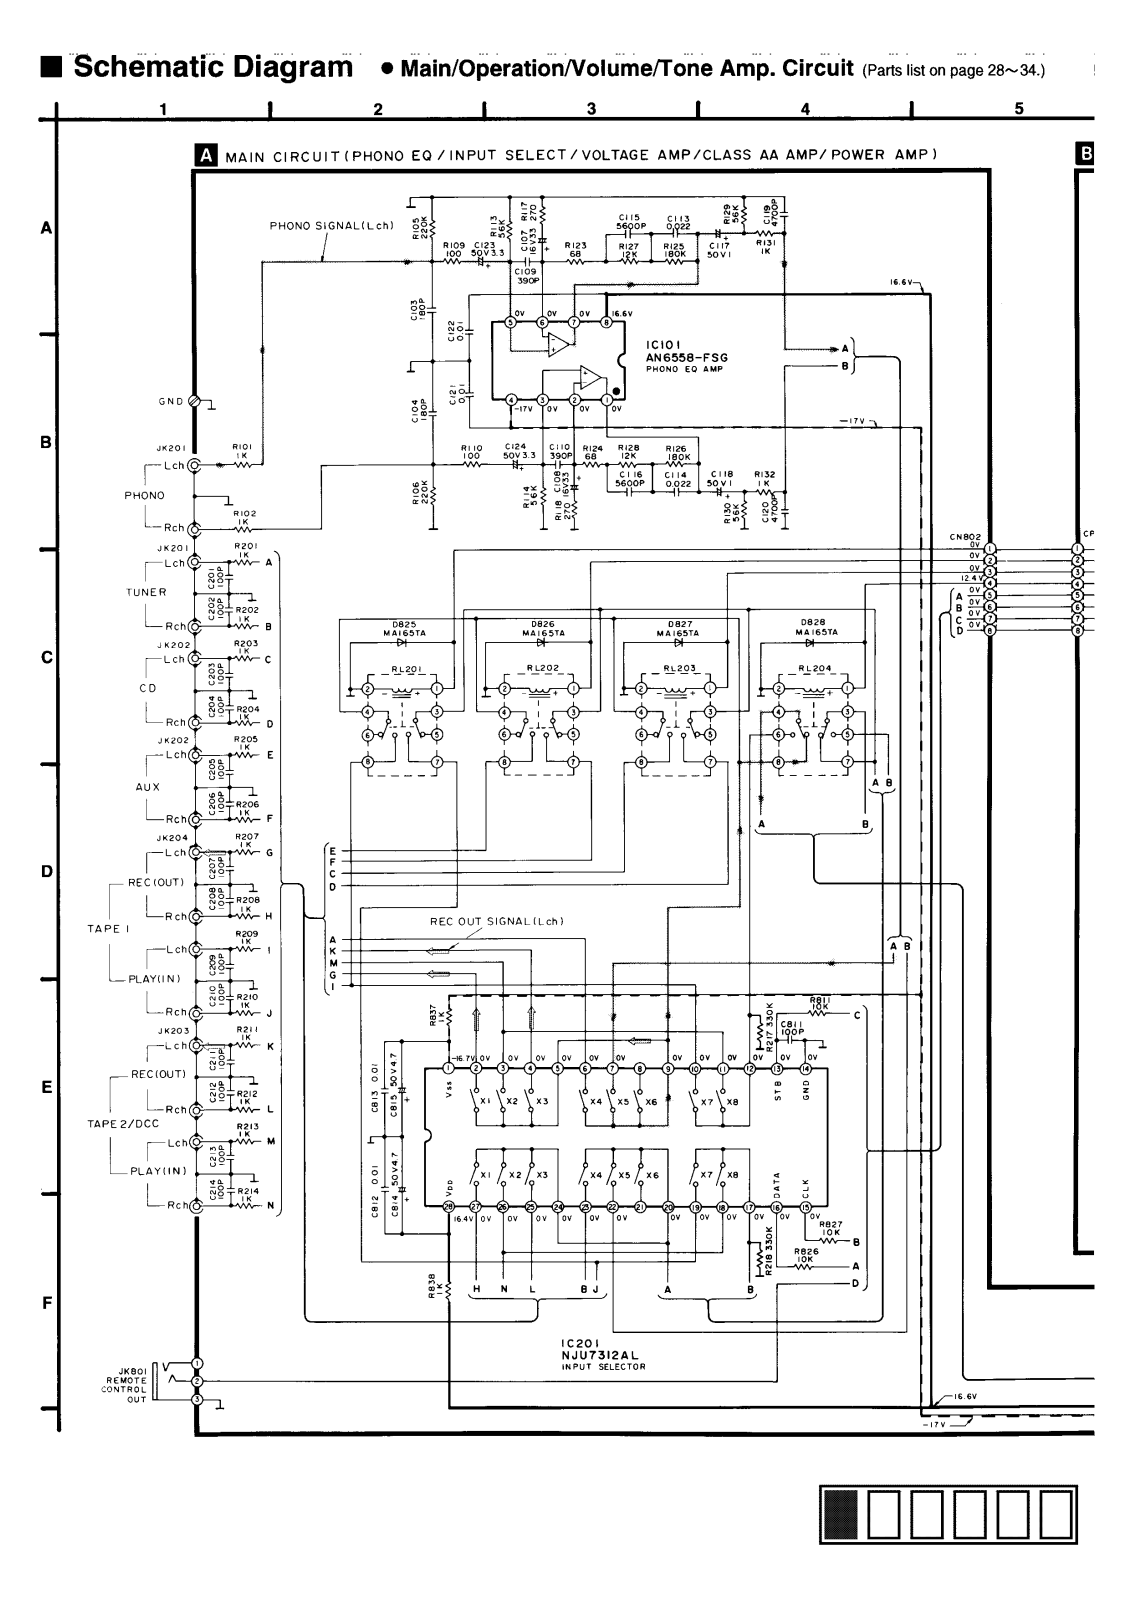 Technics RSTR-700 Schematic